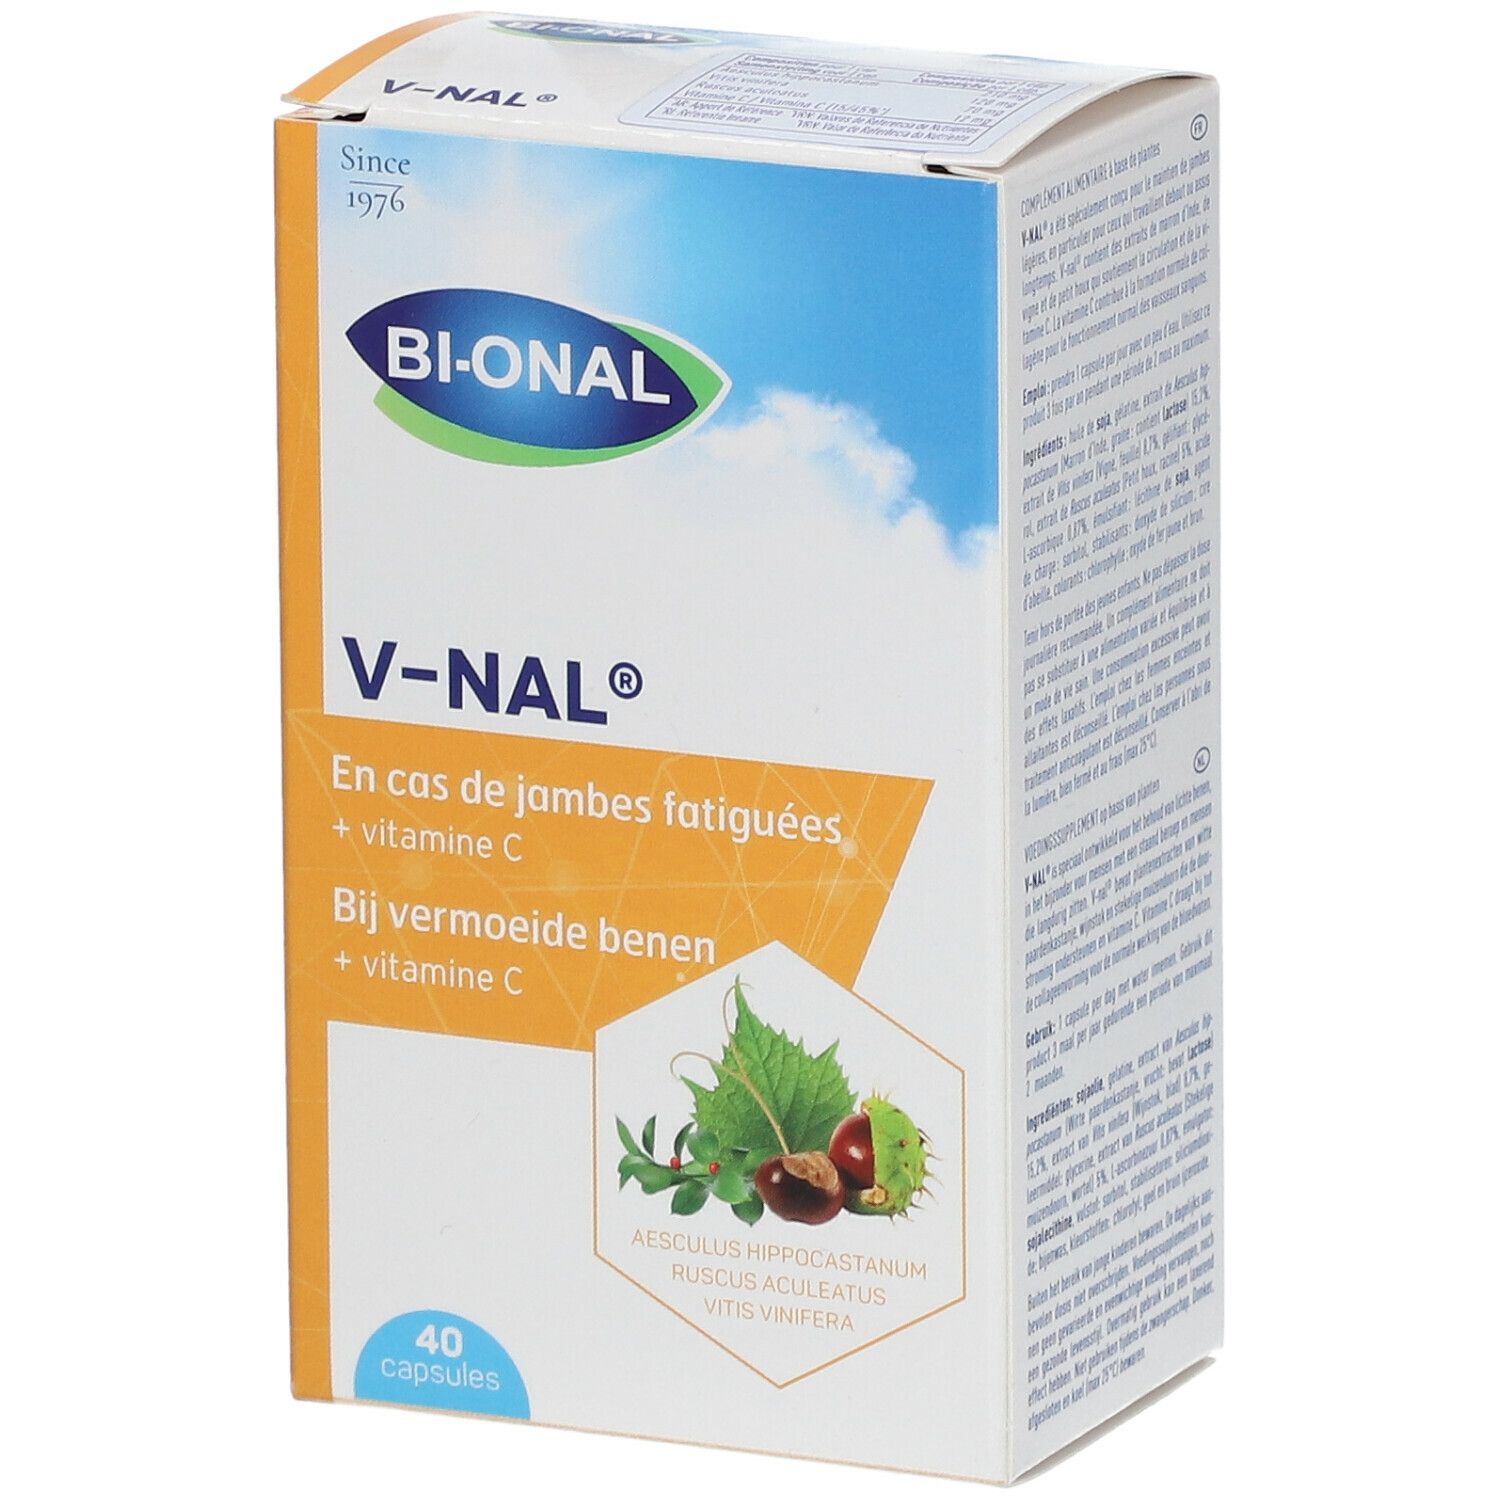 Bional V-Nal®